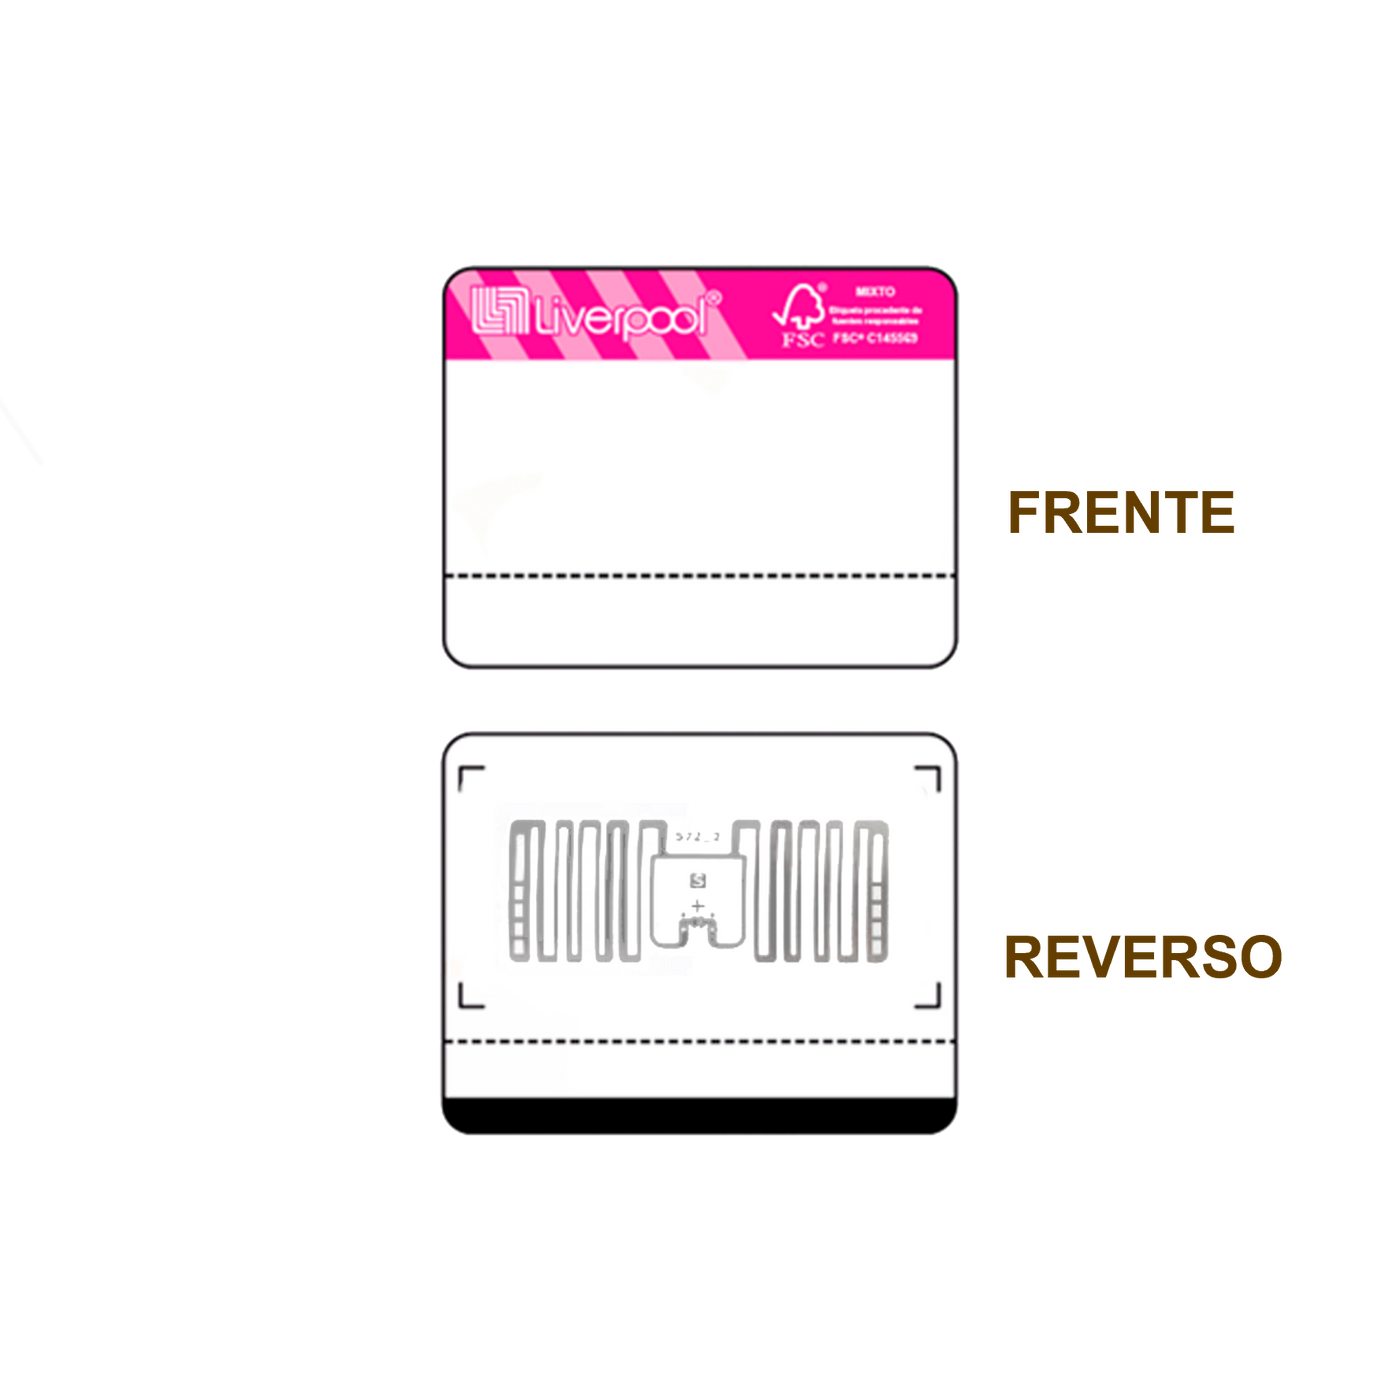 20 Millares de Etiqueta RFID TTR adherible blanca con impresión rosa, 45mm x 35 mm con inlay, Miniweb M730 de Avery Dennison, Clase 1 Gen 2, UHF 860-960 Mhz, EPC 128 Bit